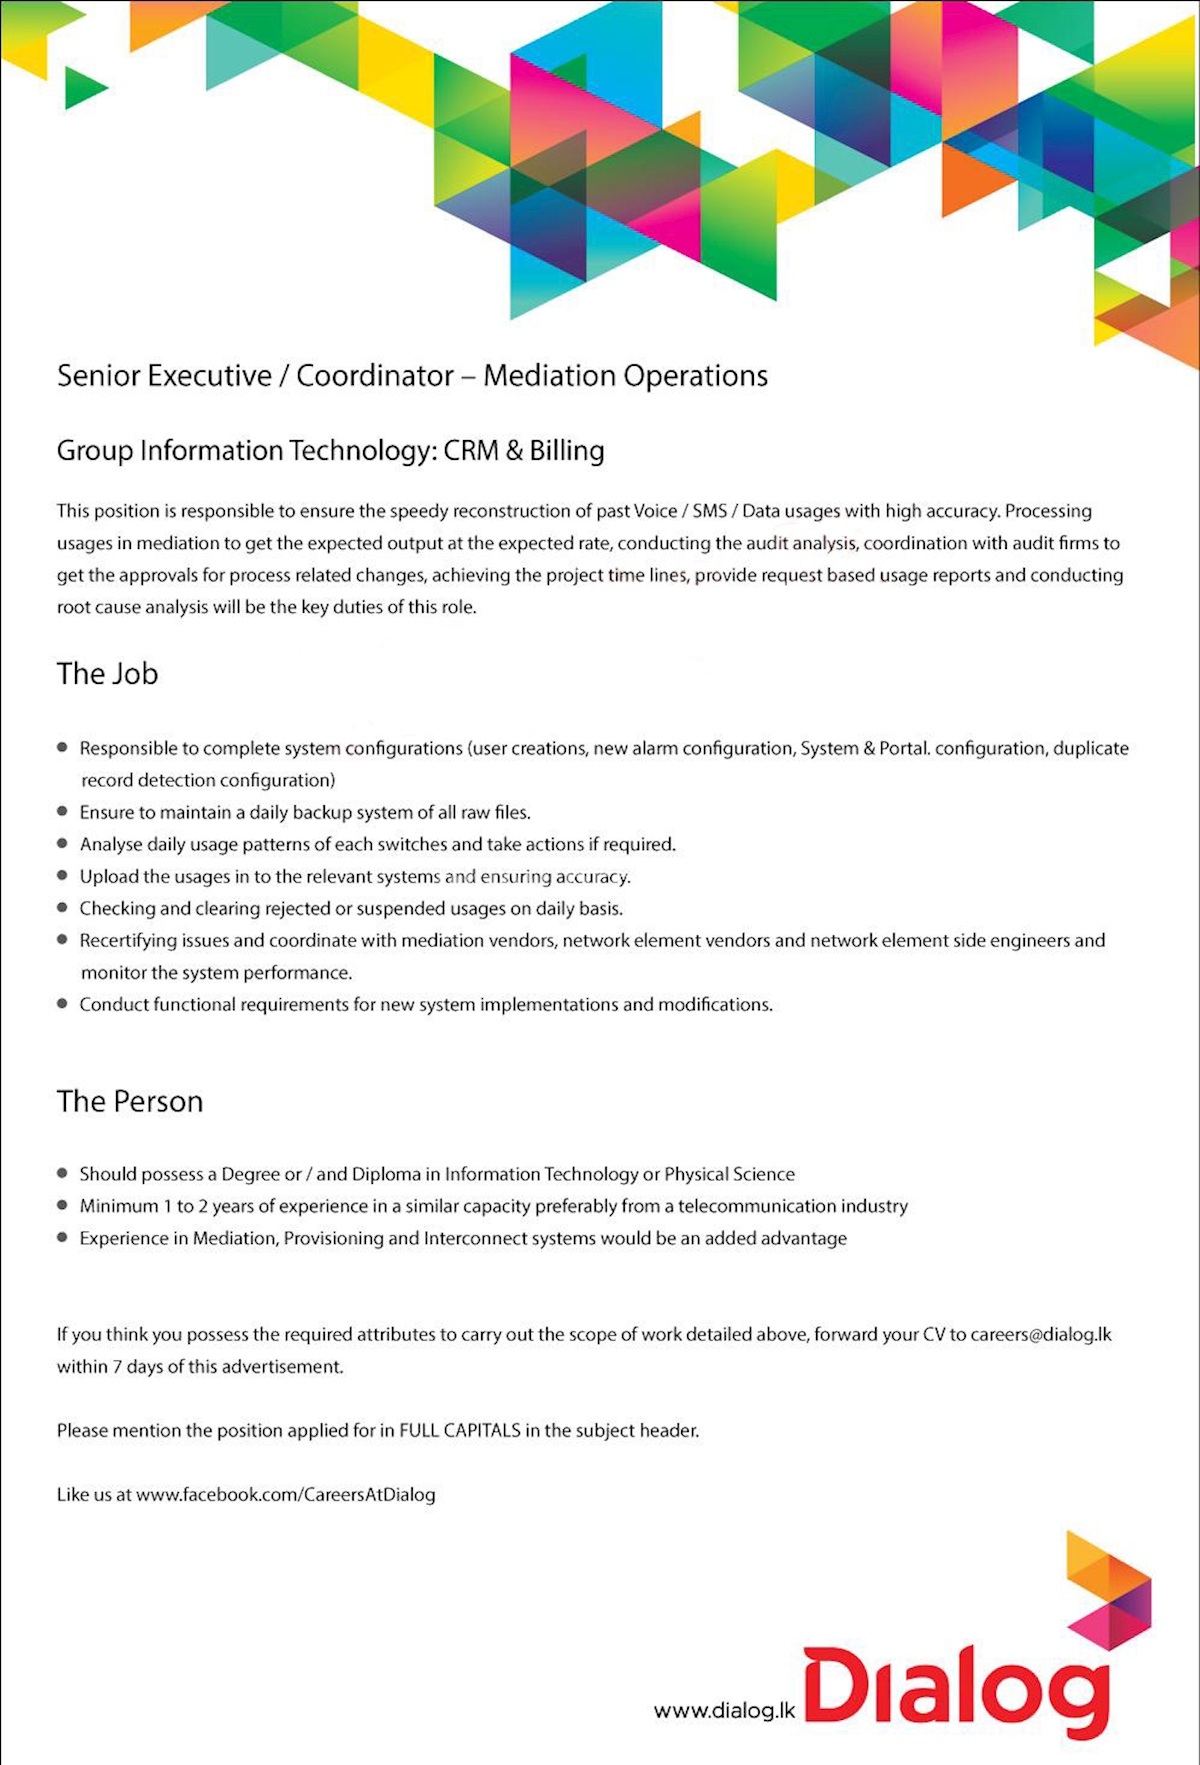 Senior Executive/Coordinator - Mediation Operations